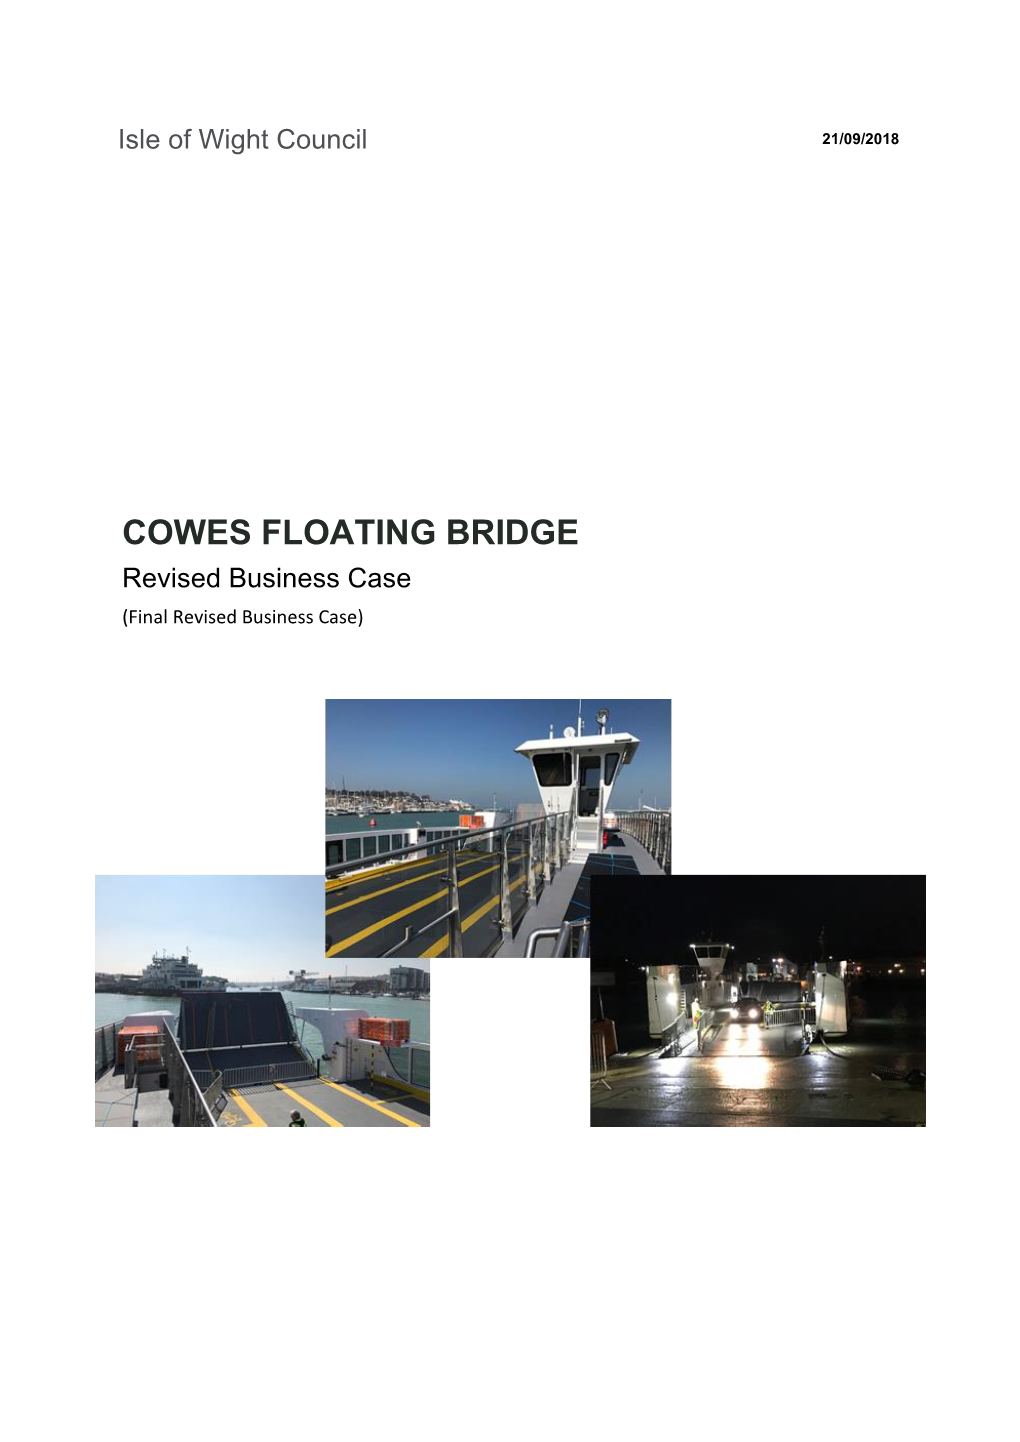 COWES FLOATING BRIDGE Revised Business Case (Final Revised Business Case)